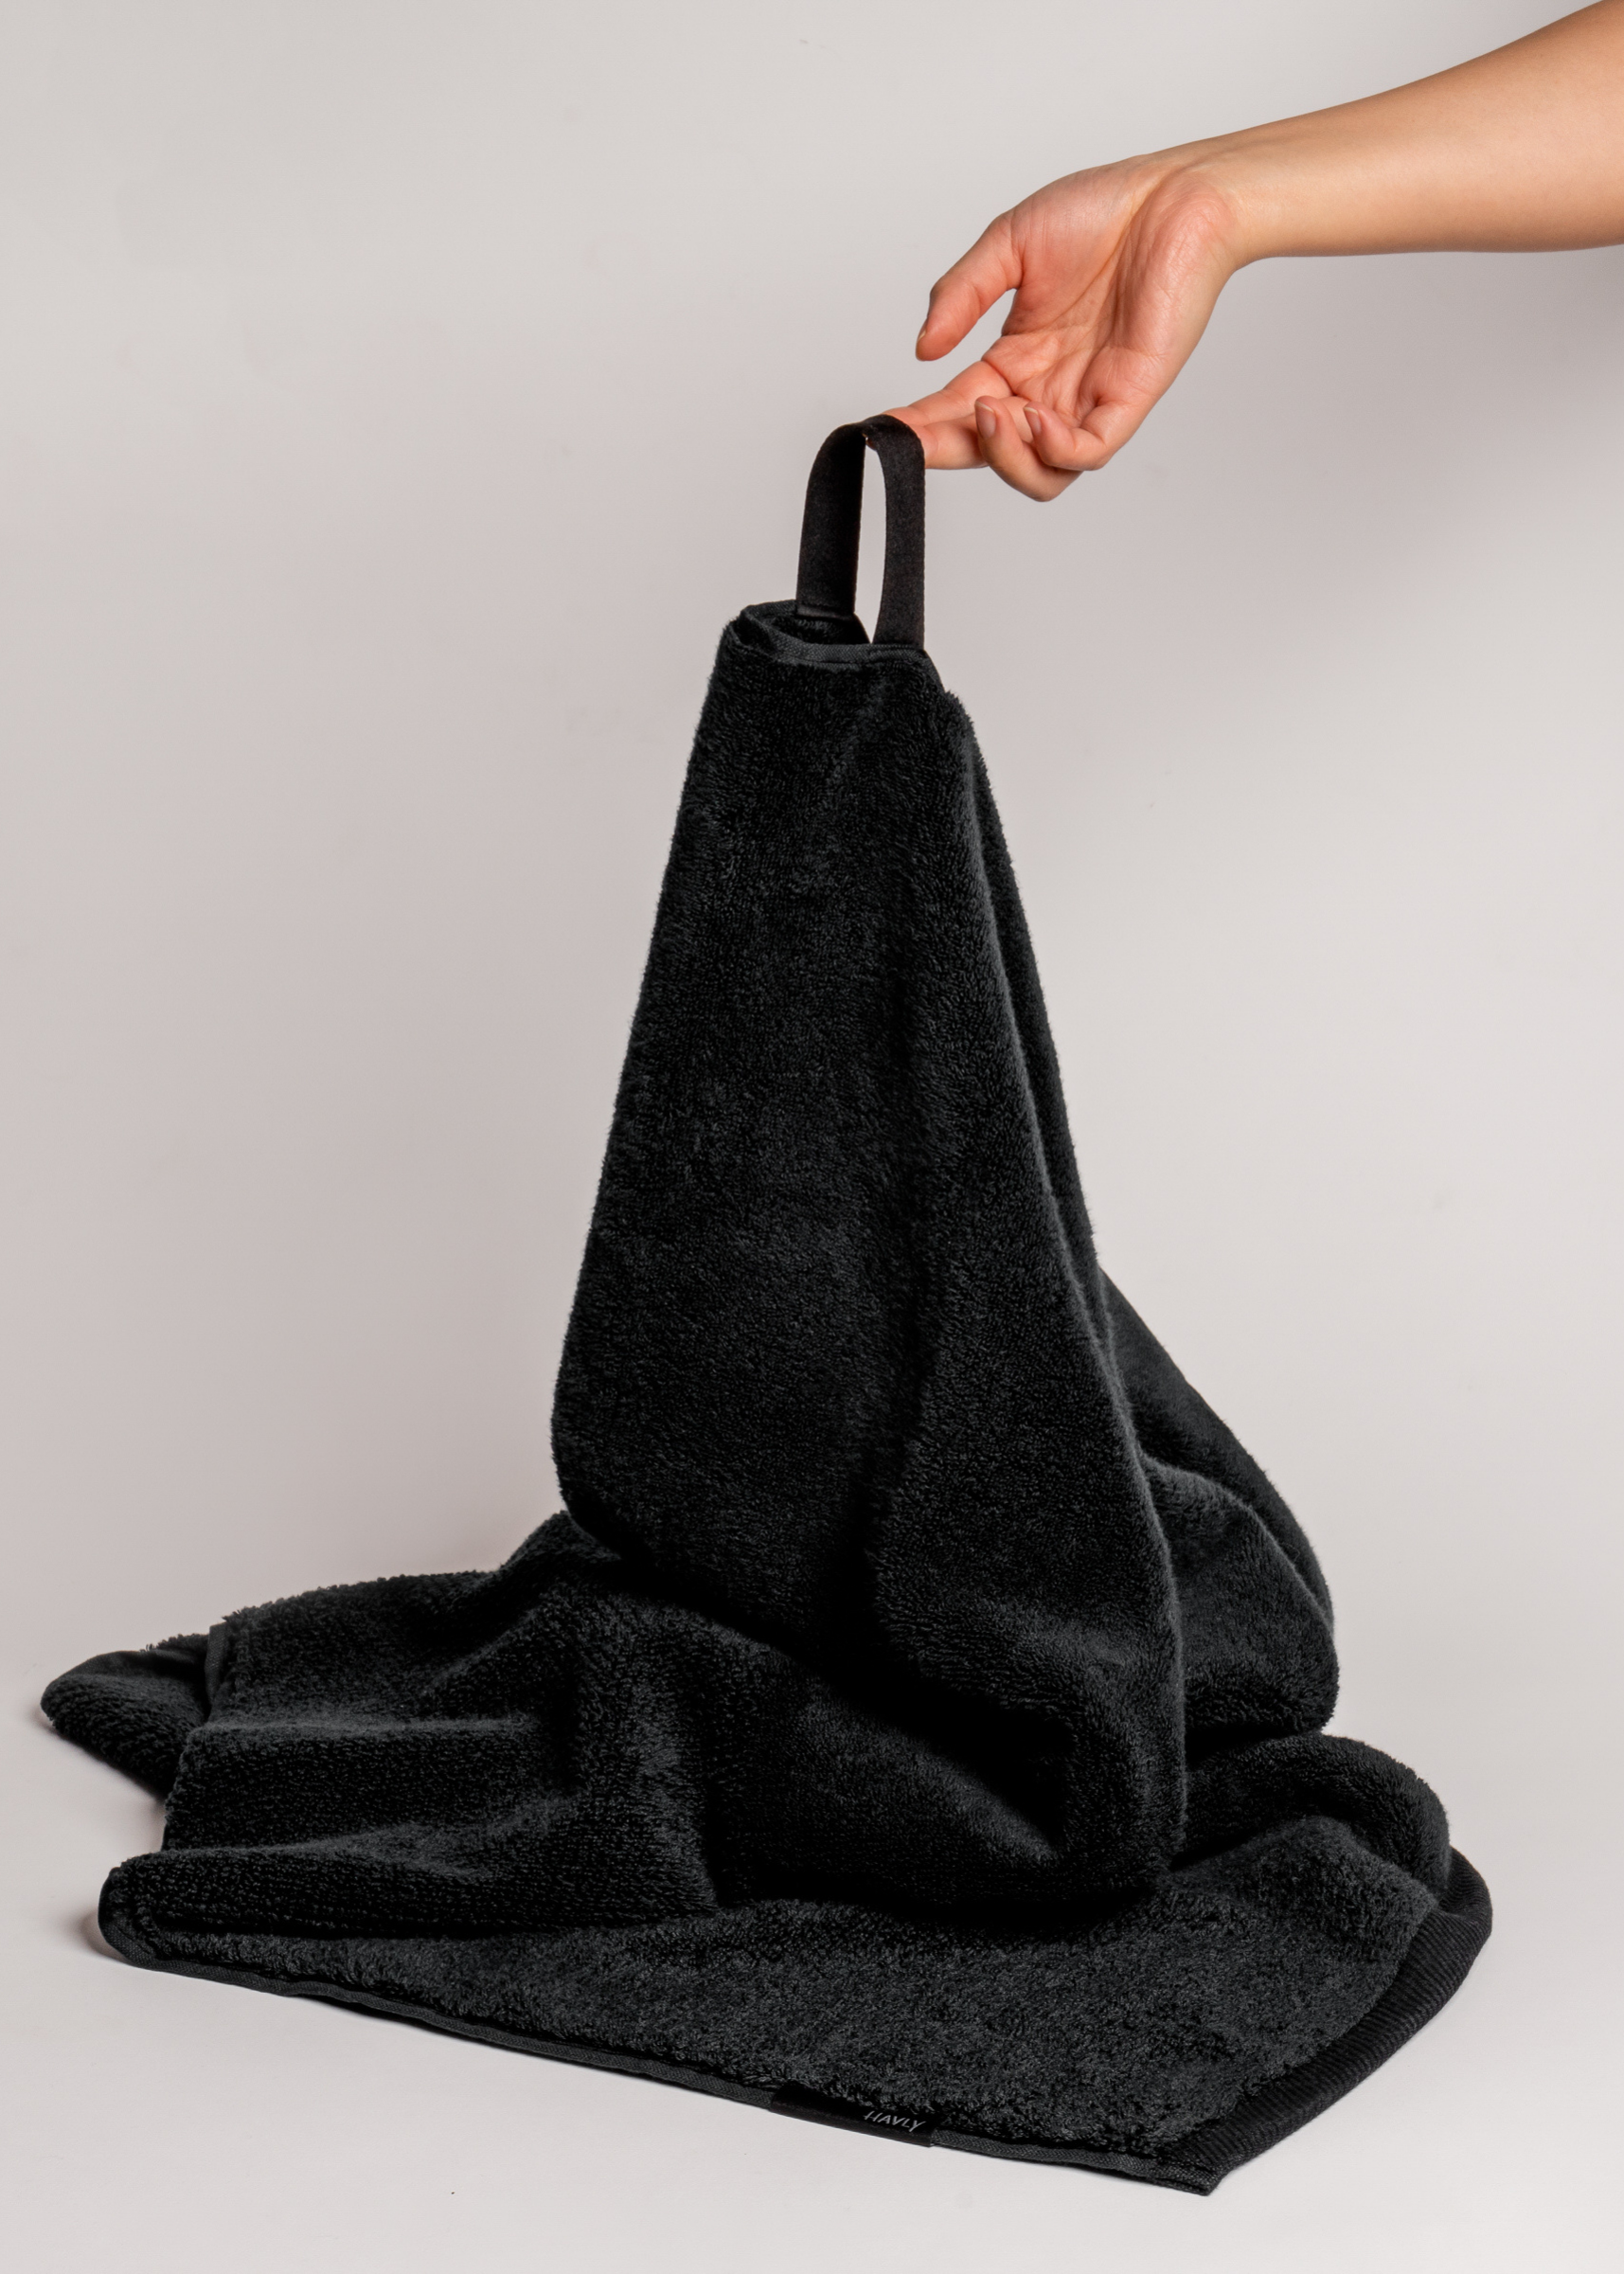 Seriously Black Hand Towel Set